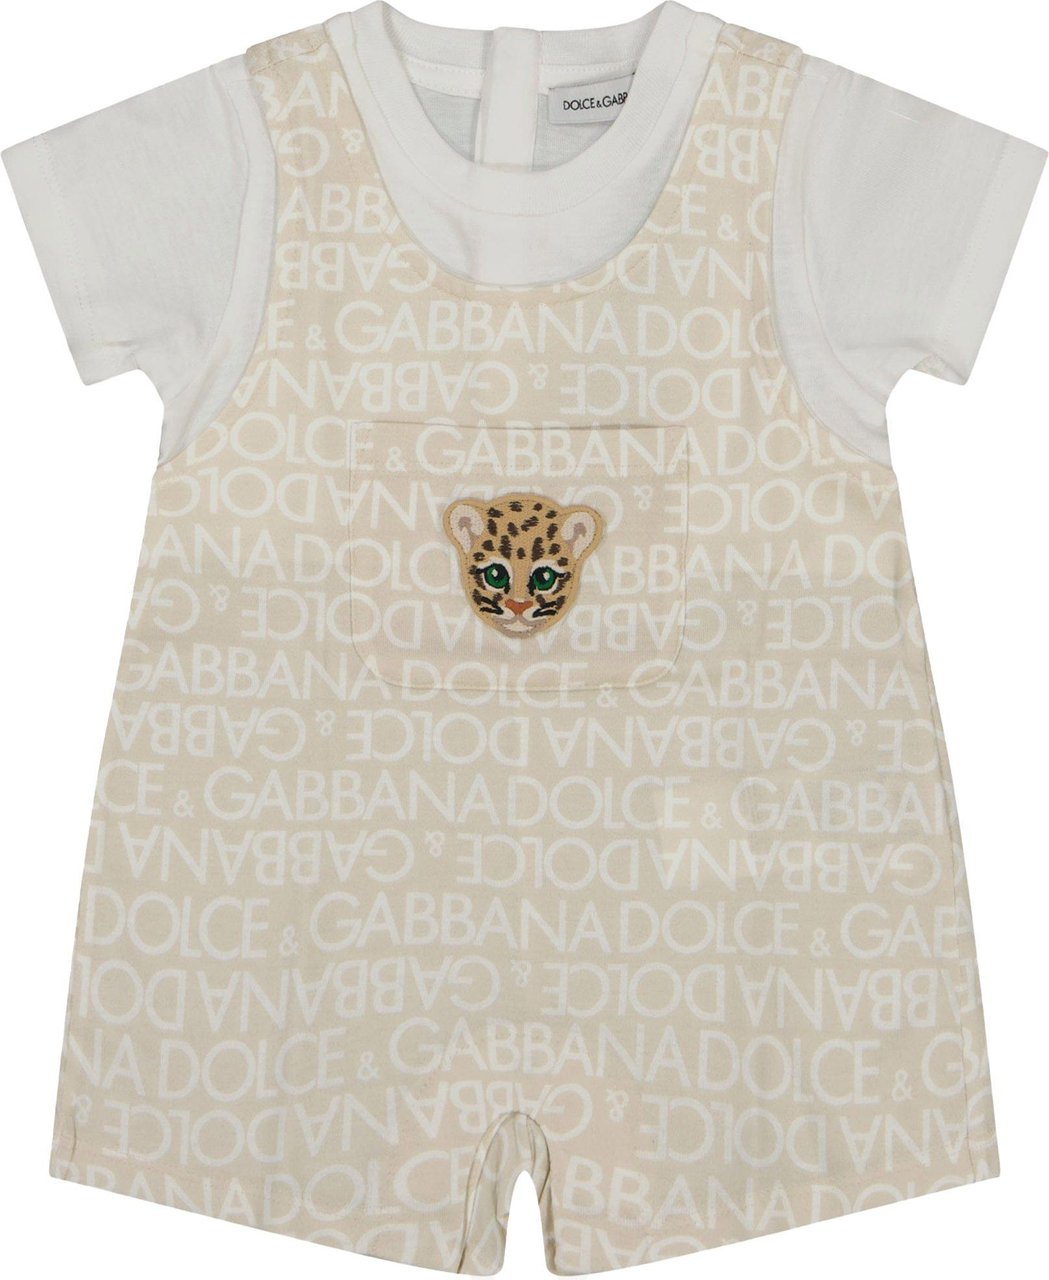 Dolce & Gabbana Dolce & Gabbana Baby Unisex Boxpakje Beige Beige